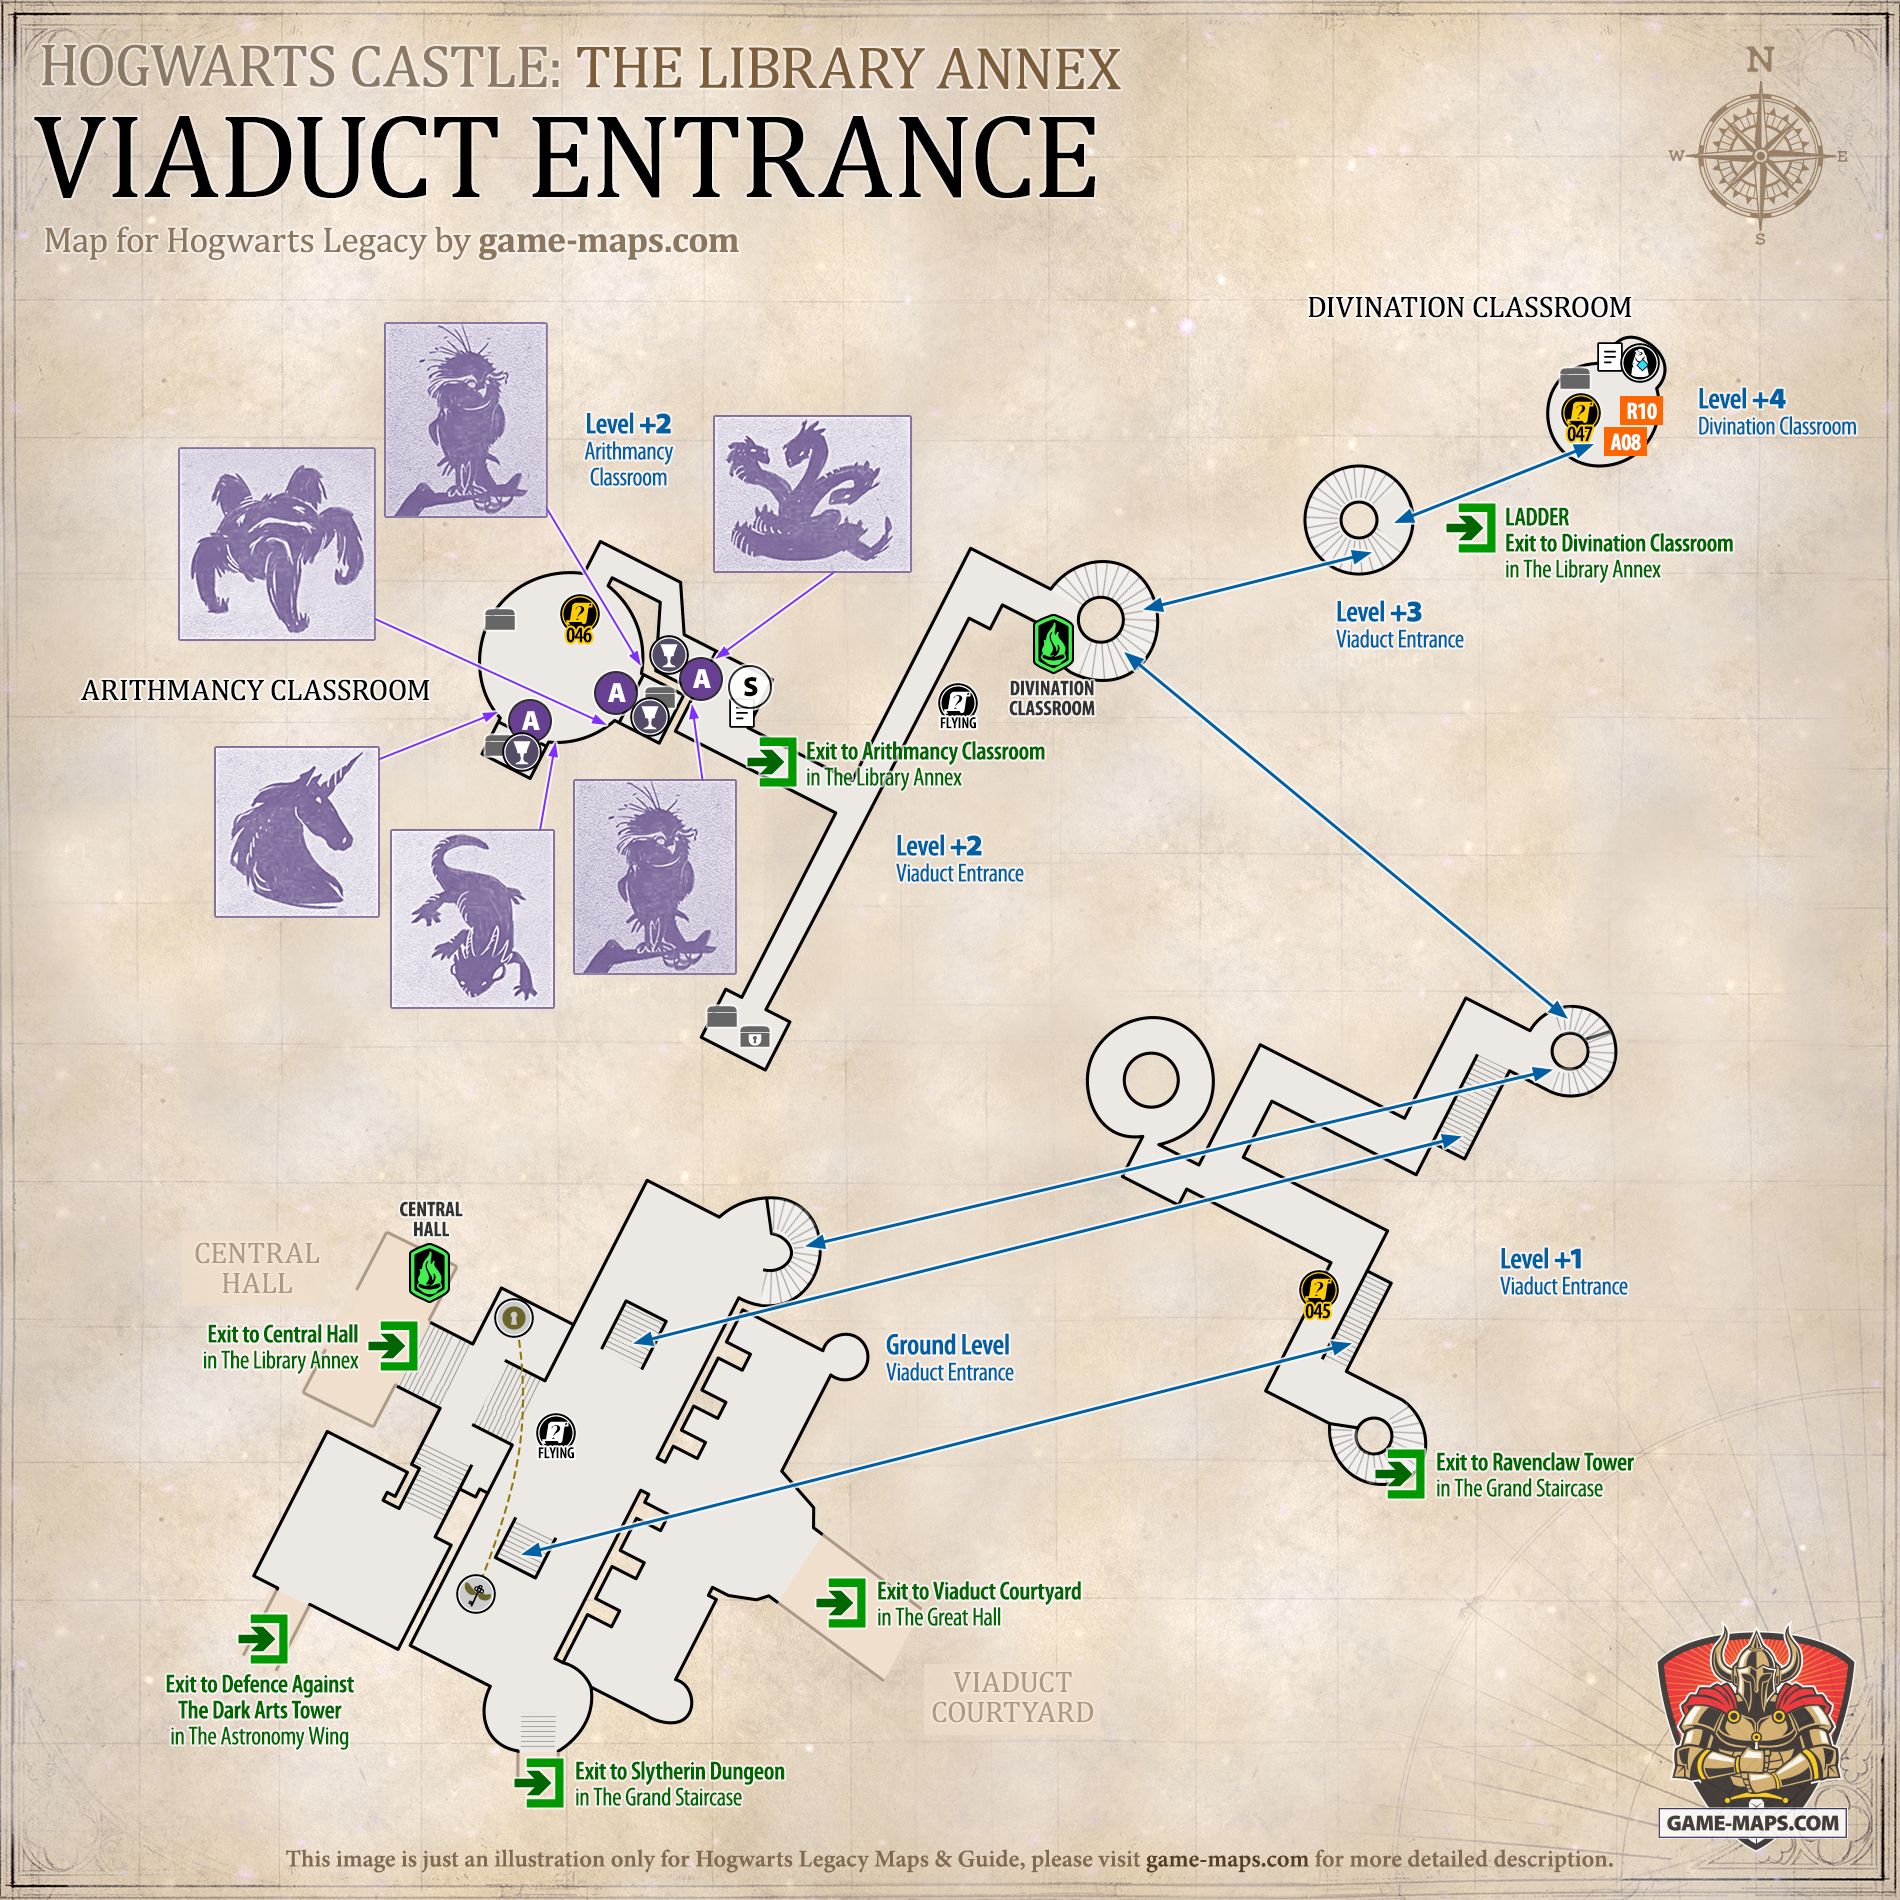 Viaduct Entrance Map for Hogwarts Legacy